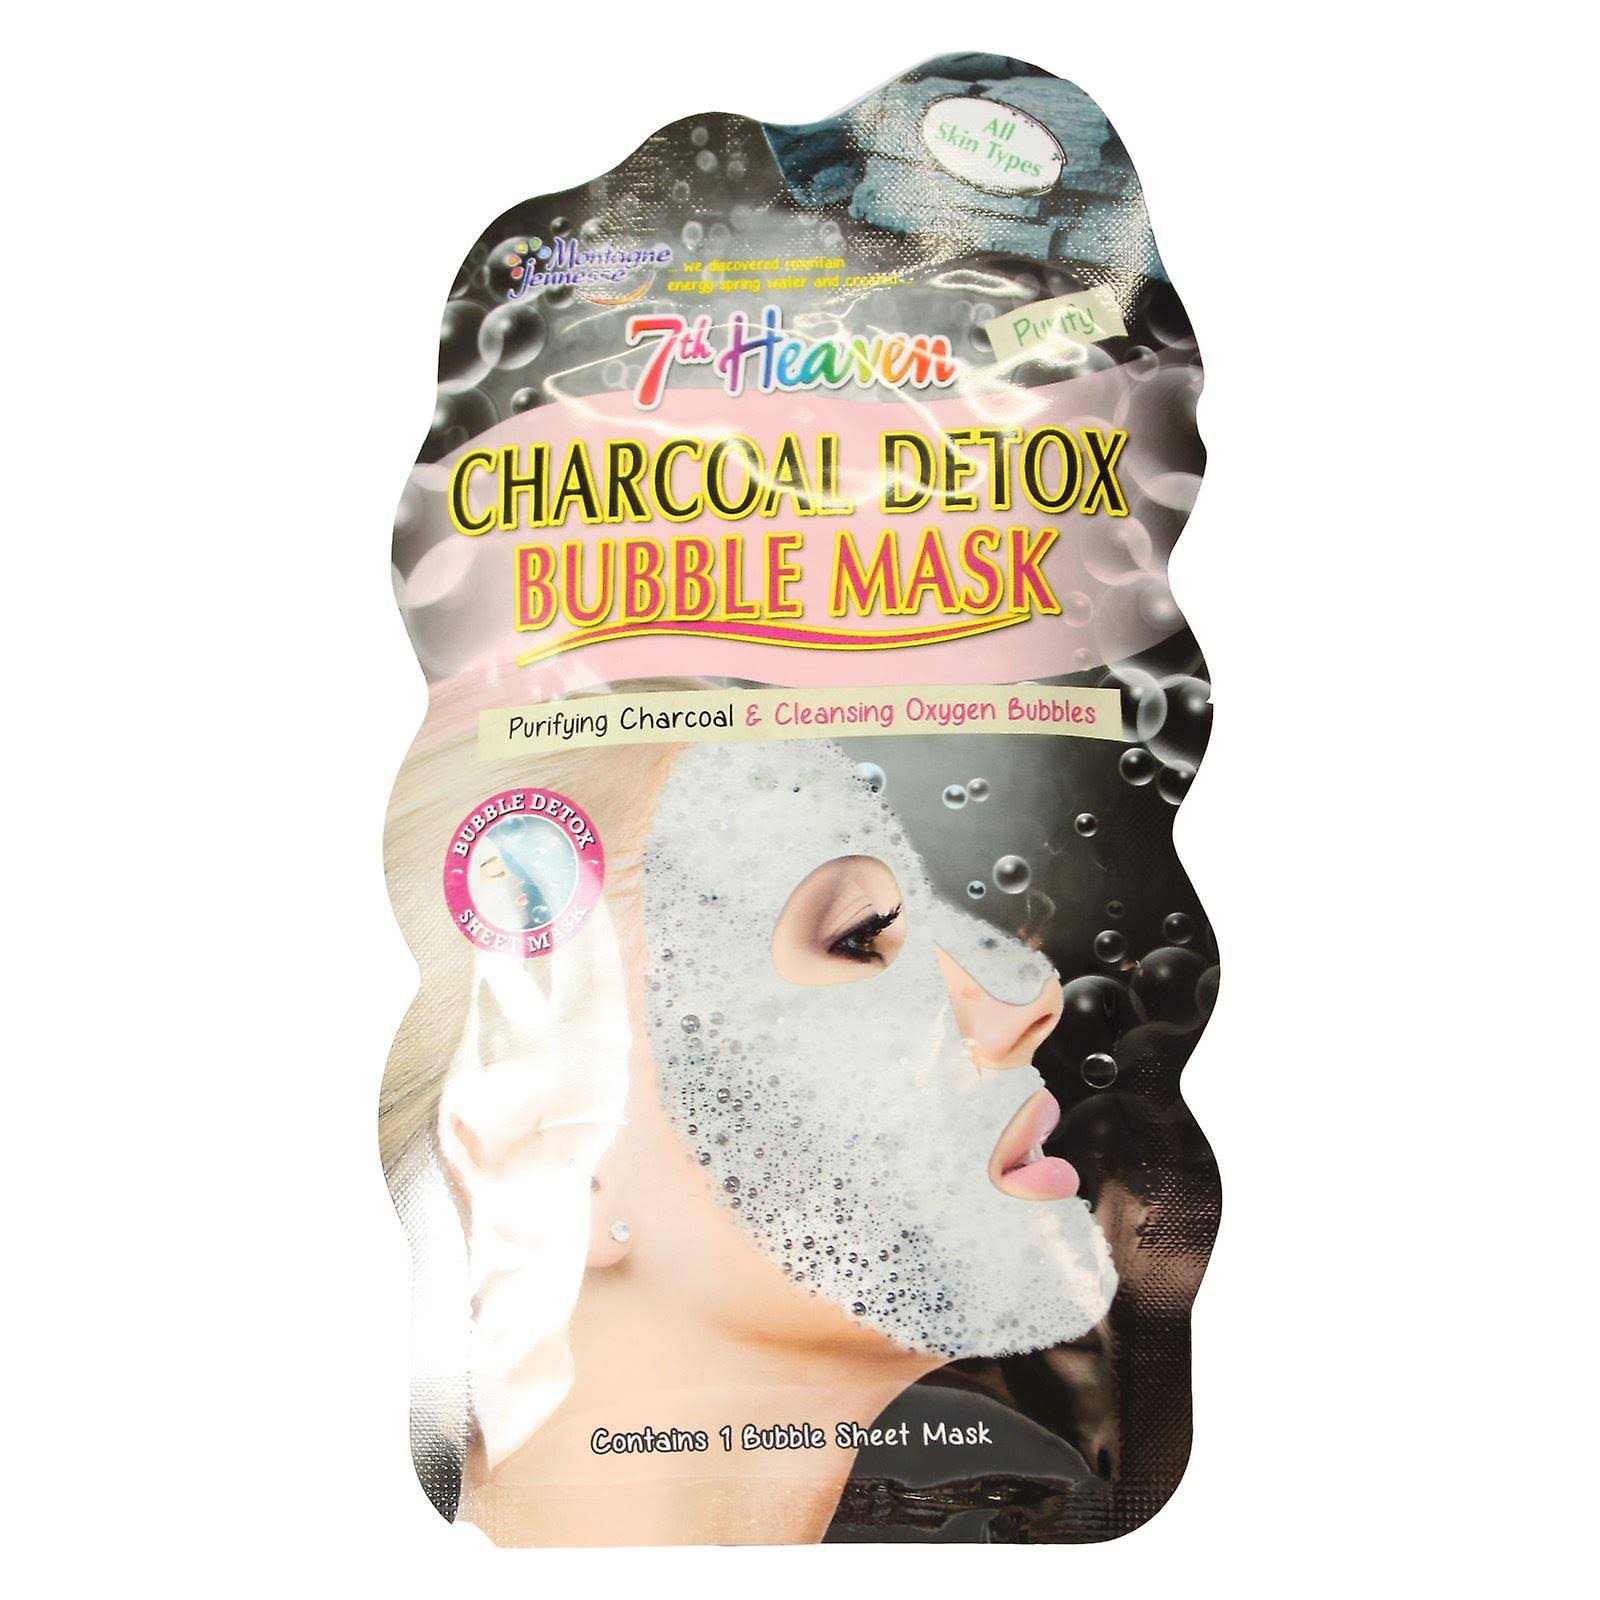 7th Heaven Charcoal Detox Bubble Mask - 20g